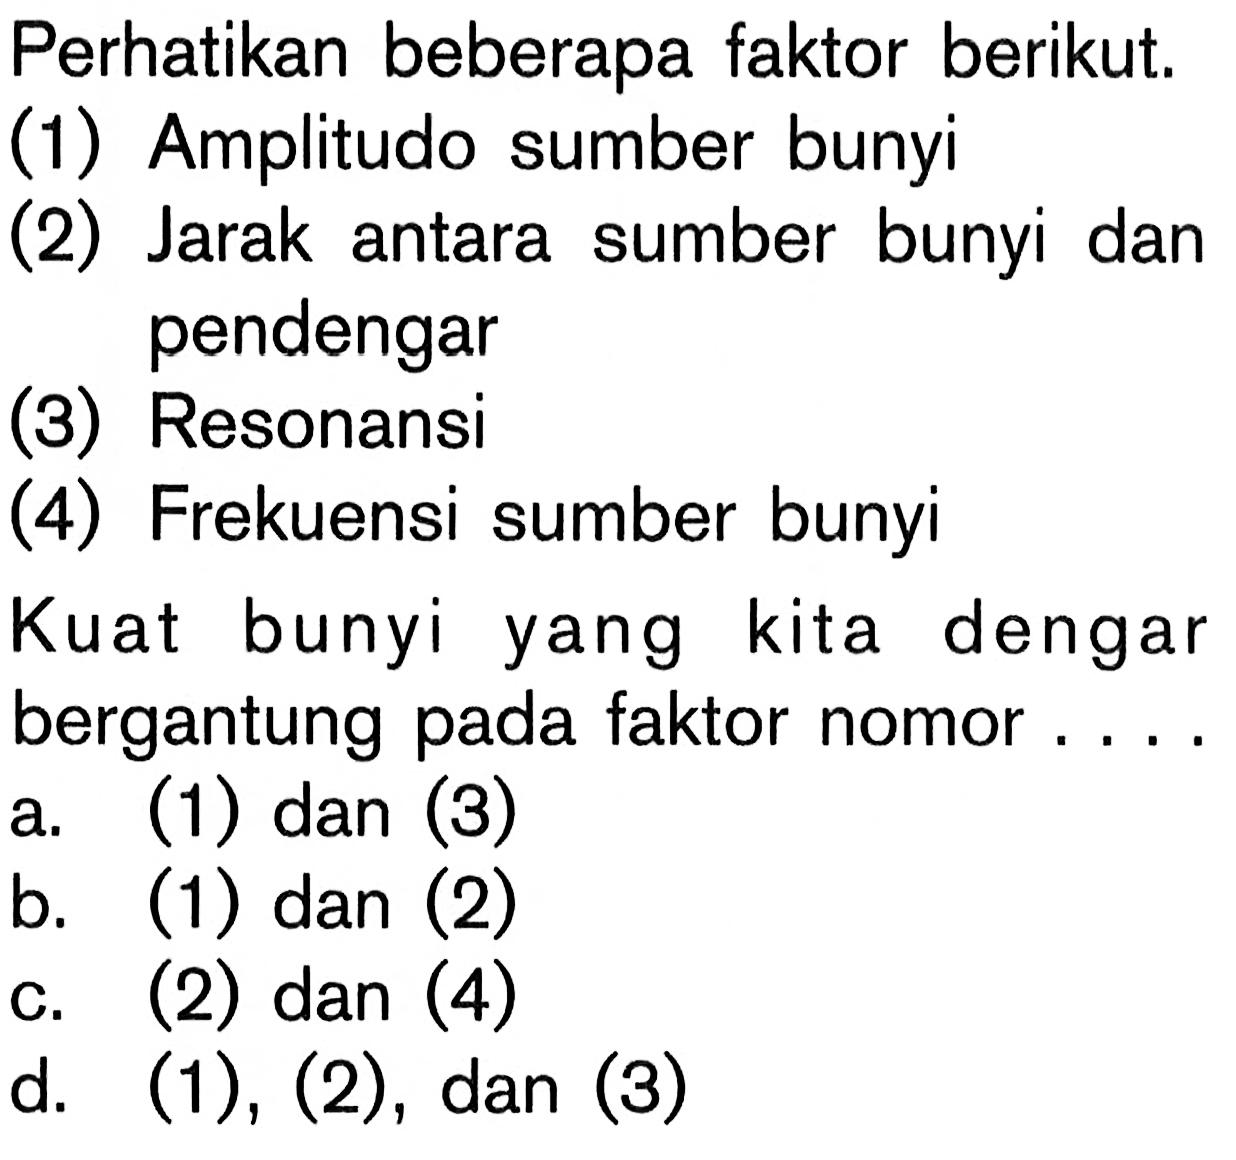 Perhatikan beberapa faktor berikut.
(1) Amplitudo sumber bunyi
(2) Jarak antara sumber bunyi dan pendengar
(3) Resonansi
(4) Frekuensi sumber bunyi
Kuat bunyi yang kita dengar bergantung pada faktor nomor ....
a. (1) dan (3)
b. (1) dan (2)
c. (2) dan (4)
d. (1), (2), dan (3)